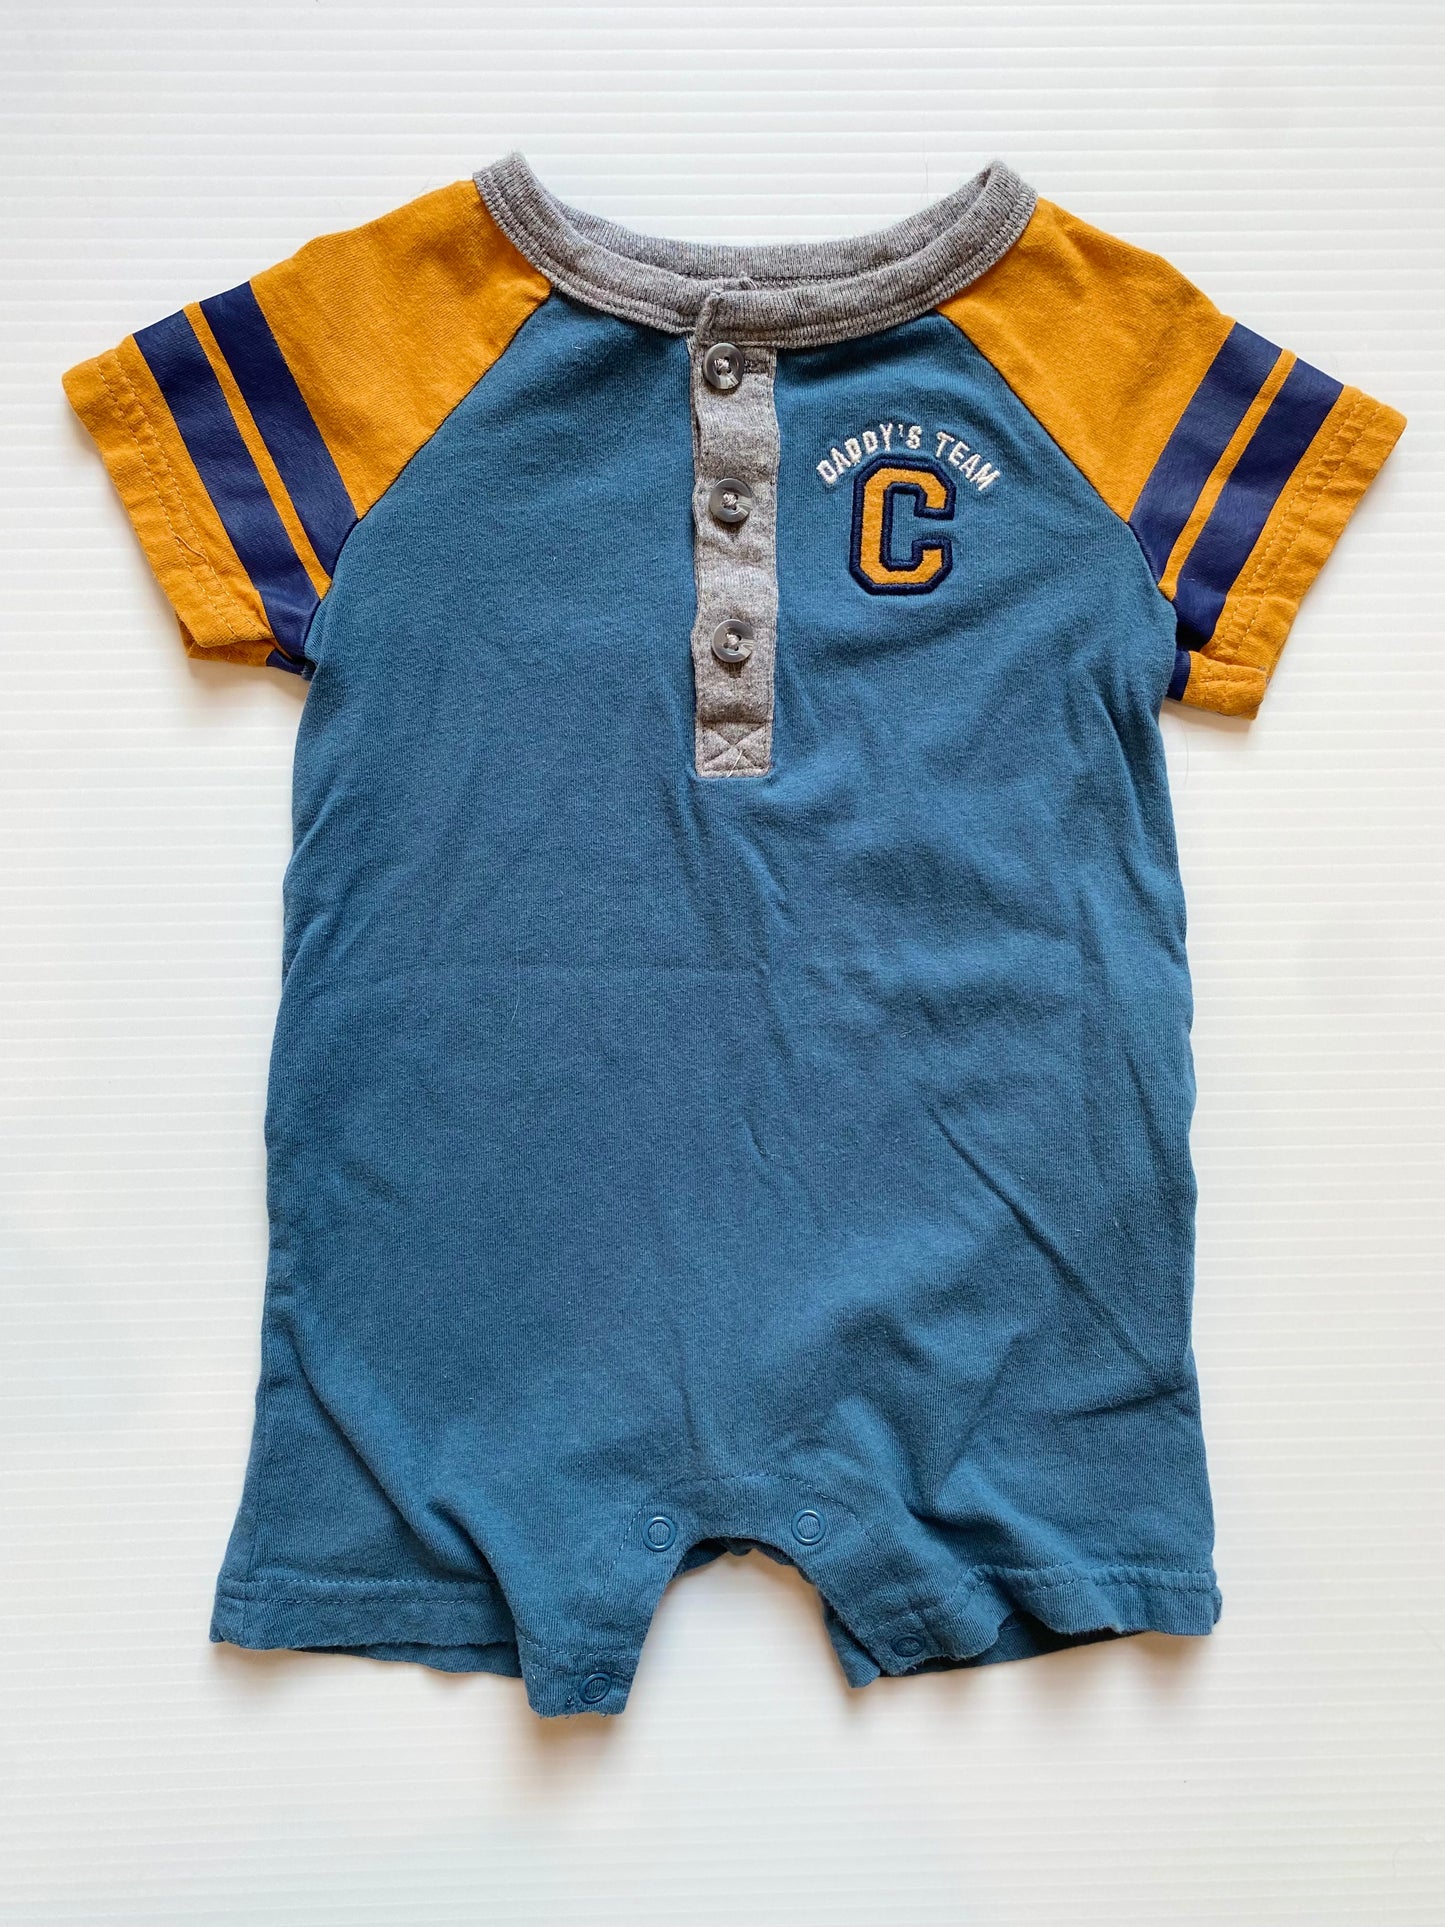 Carters Boys 12m Blue/Yellow “Daddy’s Team” Short sleeve Henley Romper